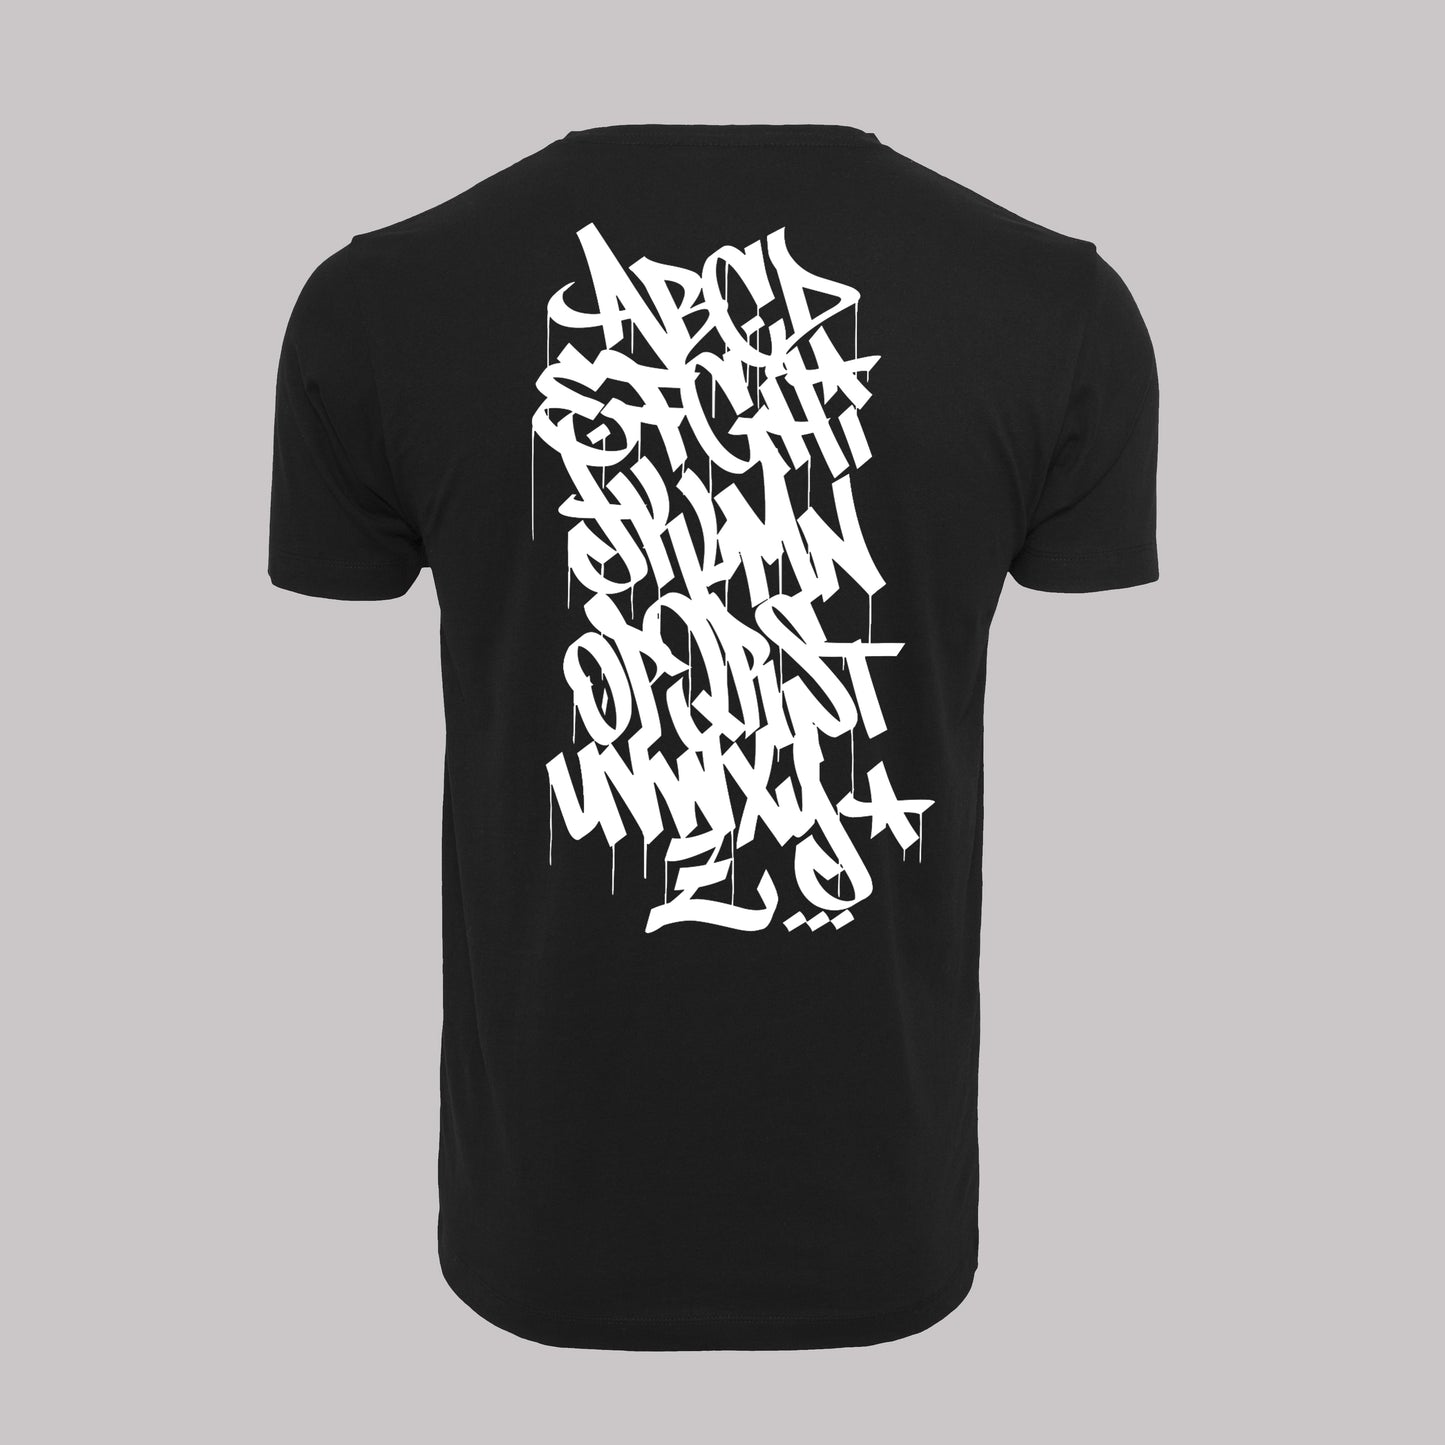 ABC – BLACK / WHITE T-Shirt by ATOM